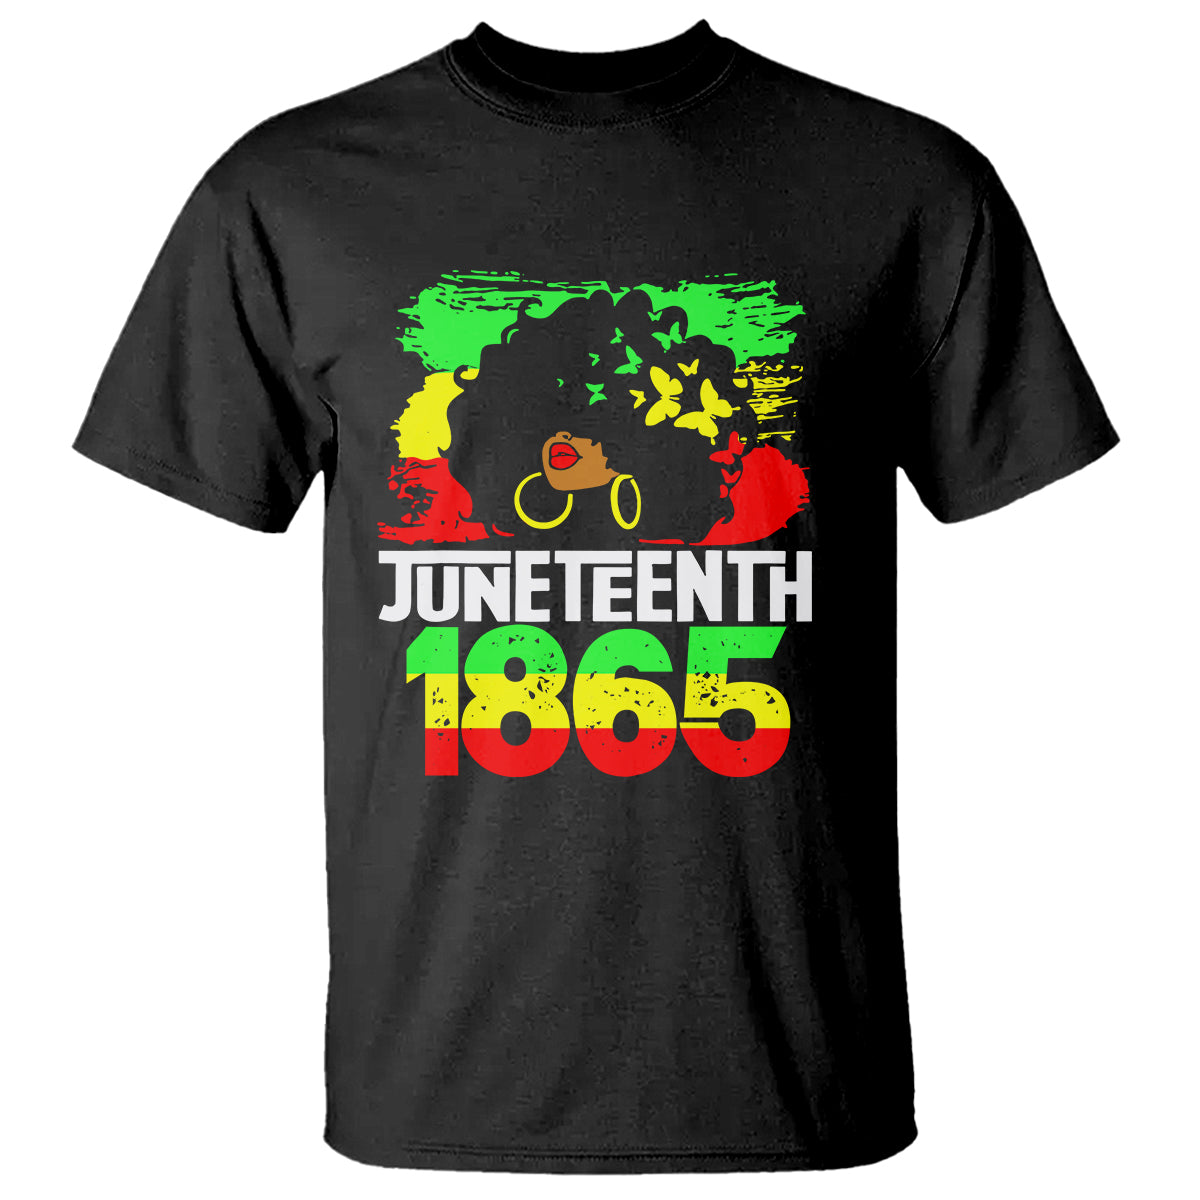 Afro Woman T Shirt Juneteenth 1865 Black Pride